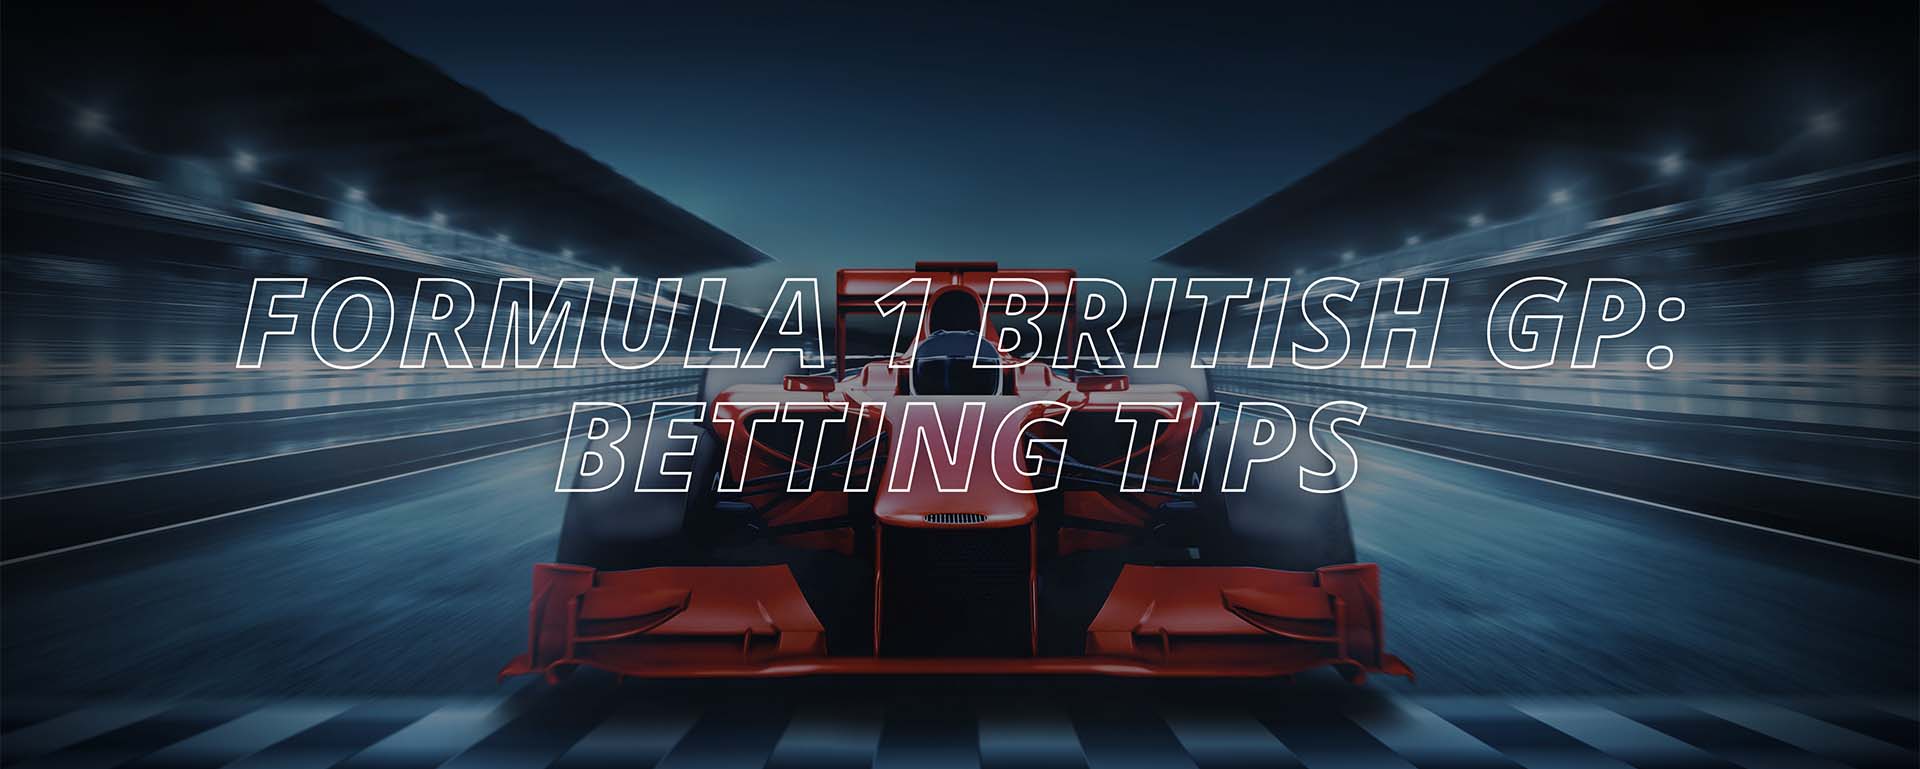 FORMULA 1 BRITISH GP: BETTING TIPS